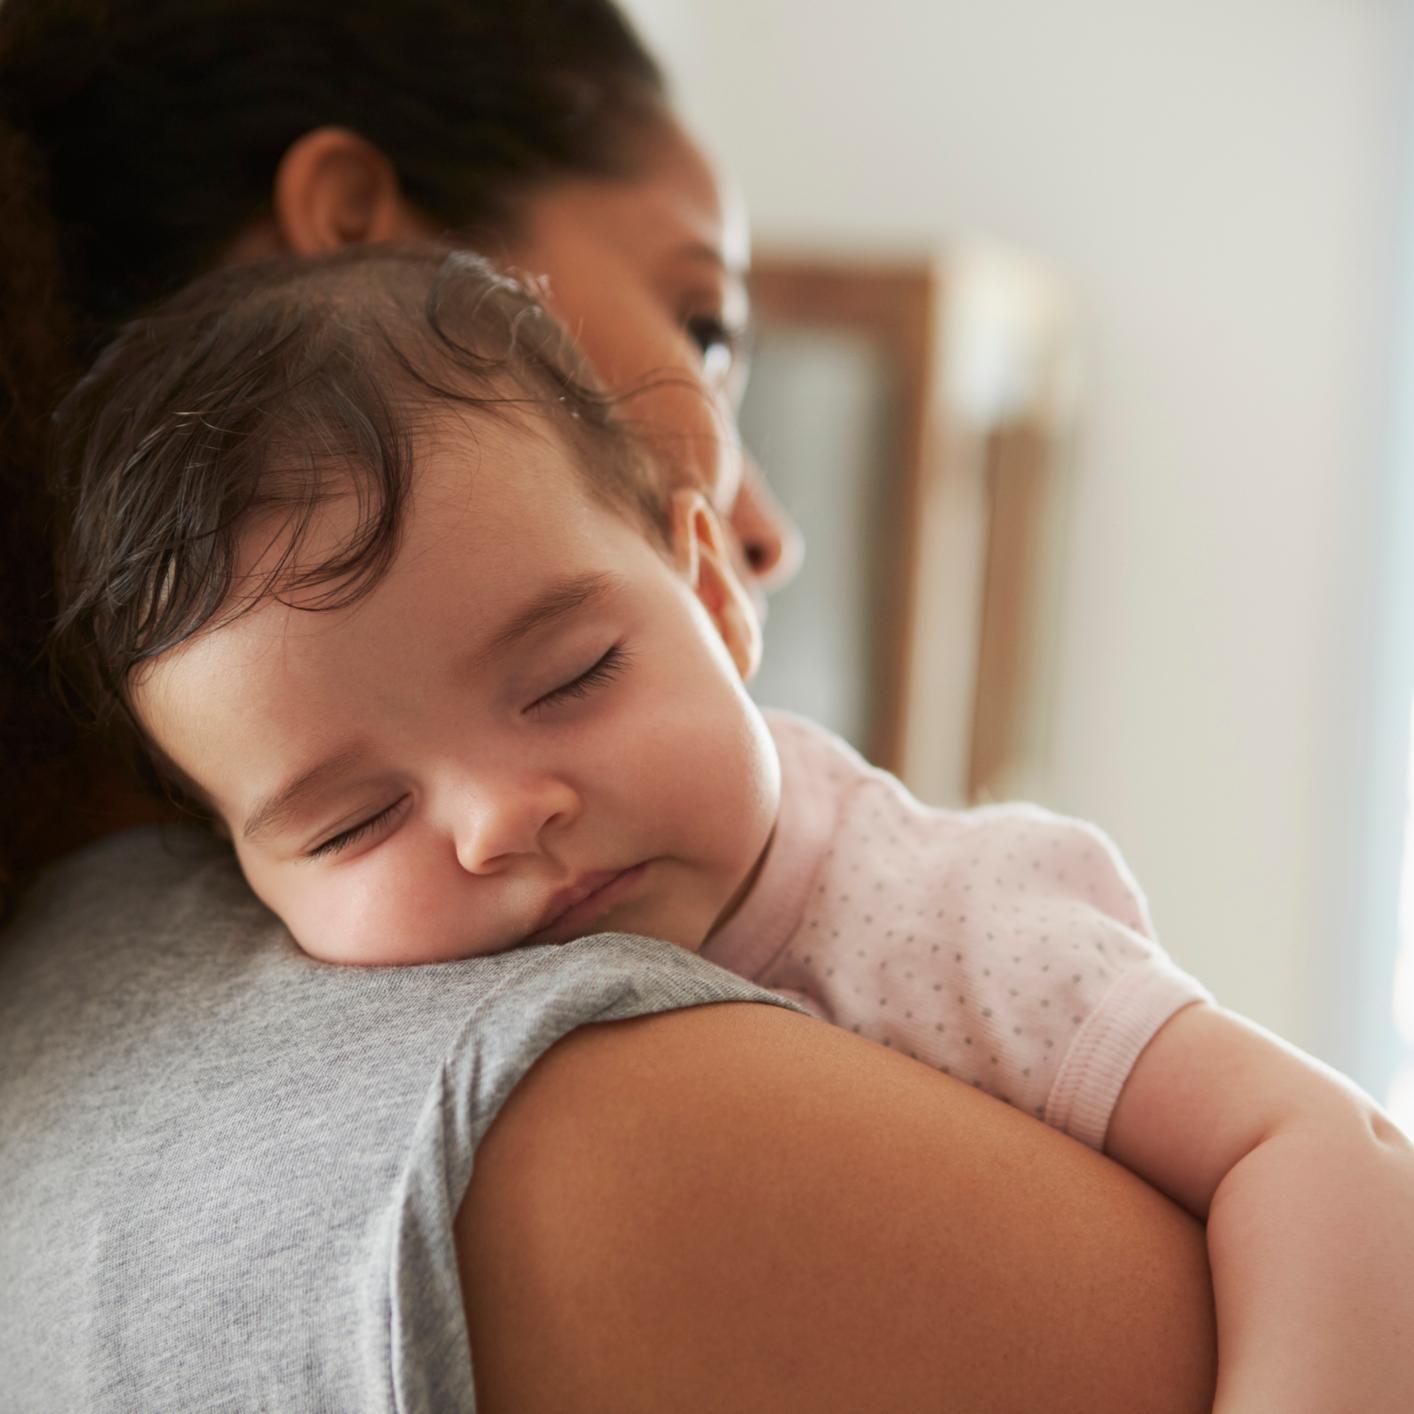 SAFE SLEEP: Breastfeeding and Safe Sleep